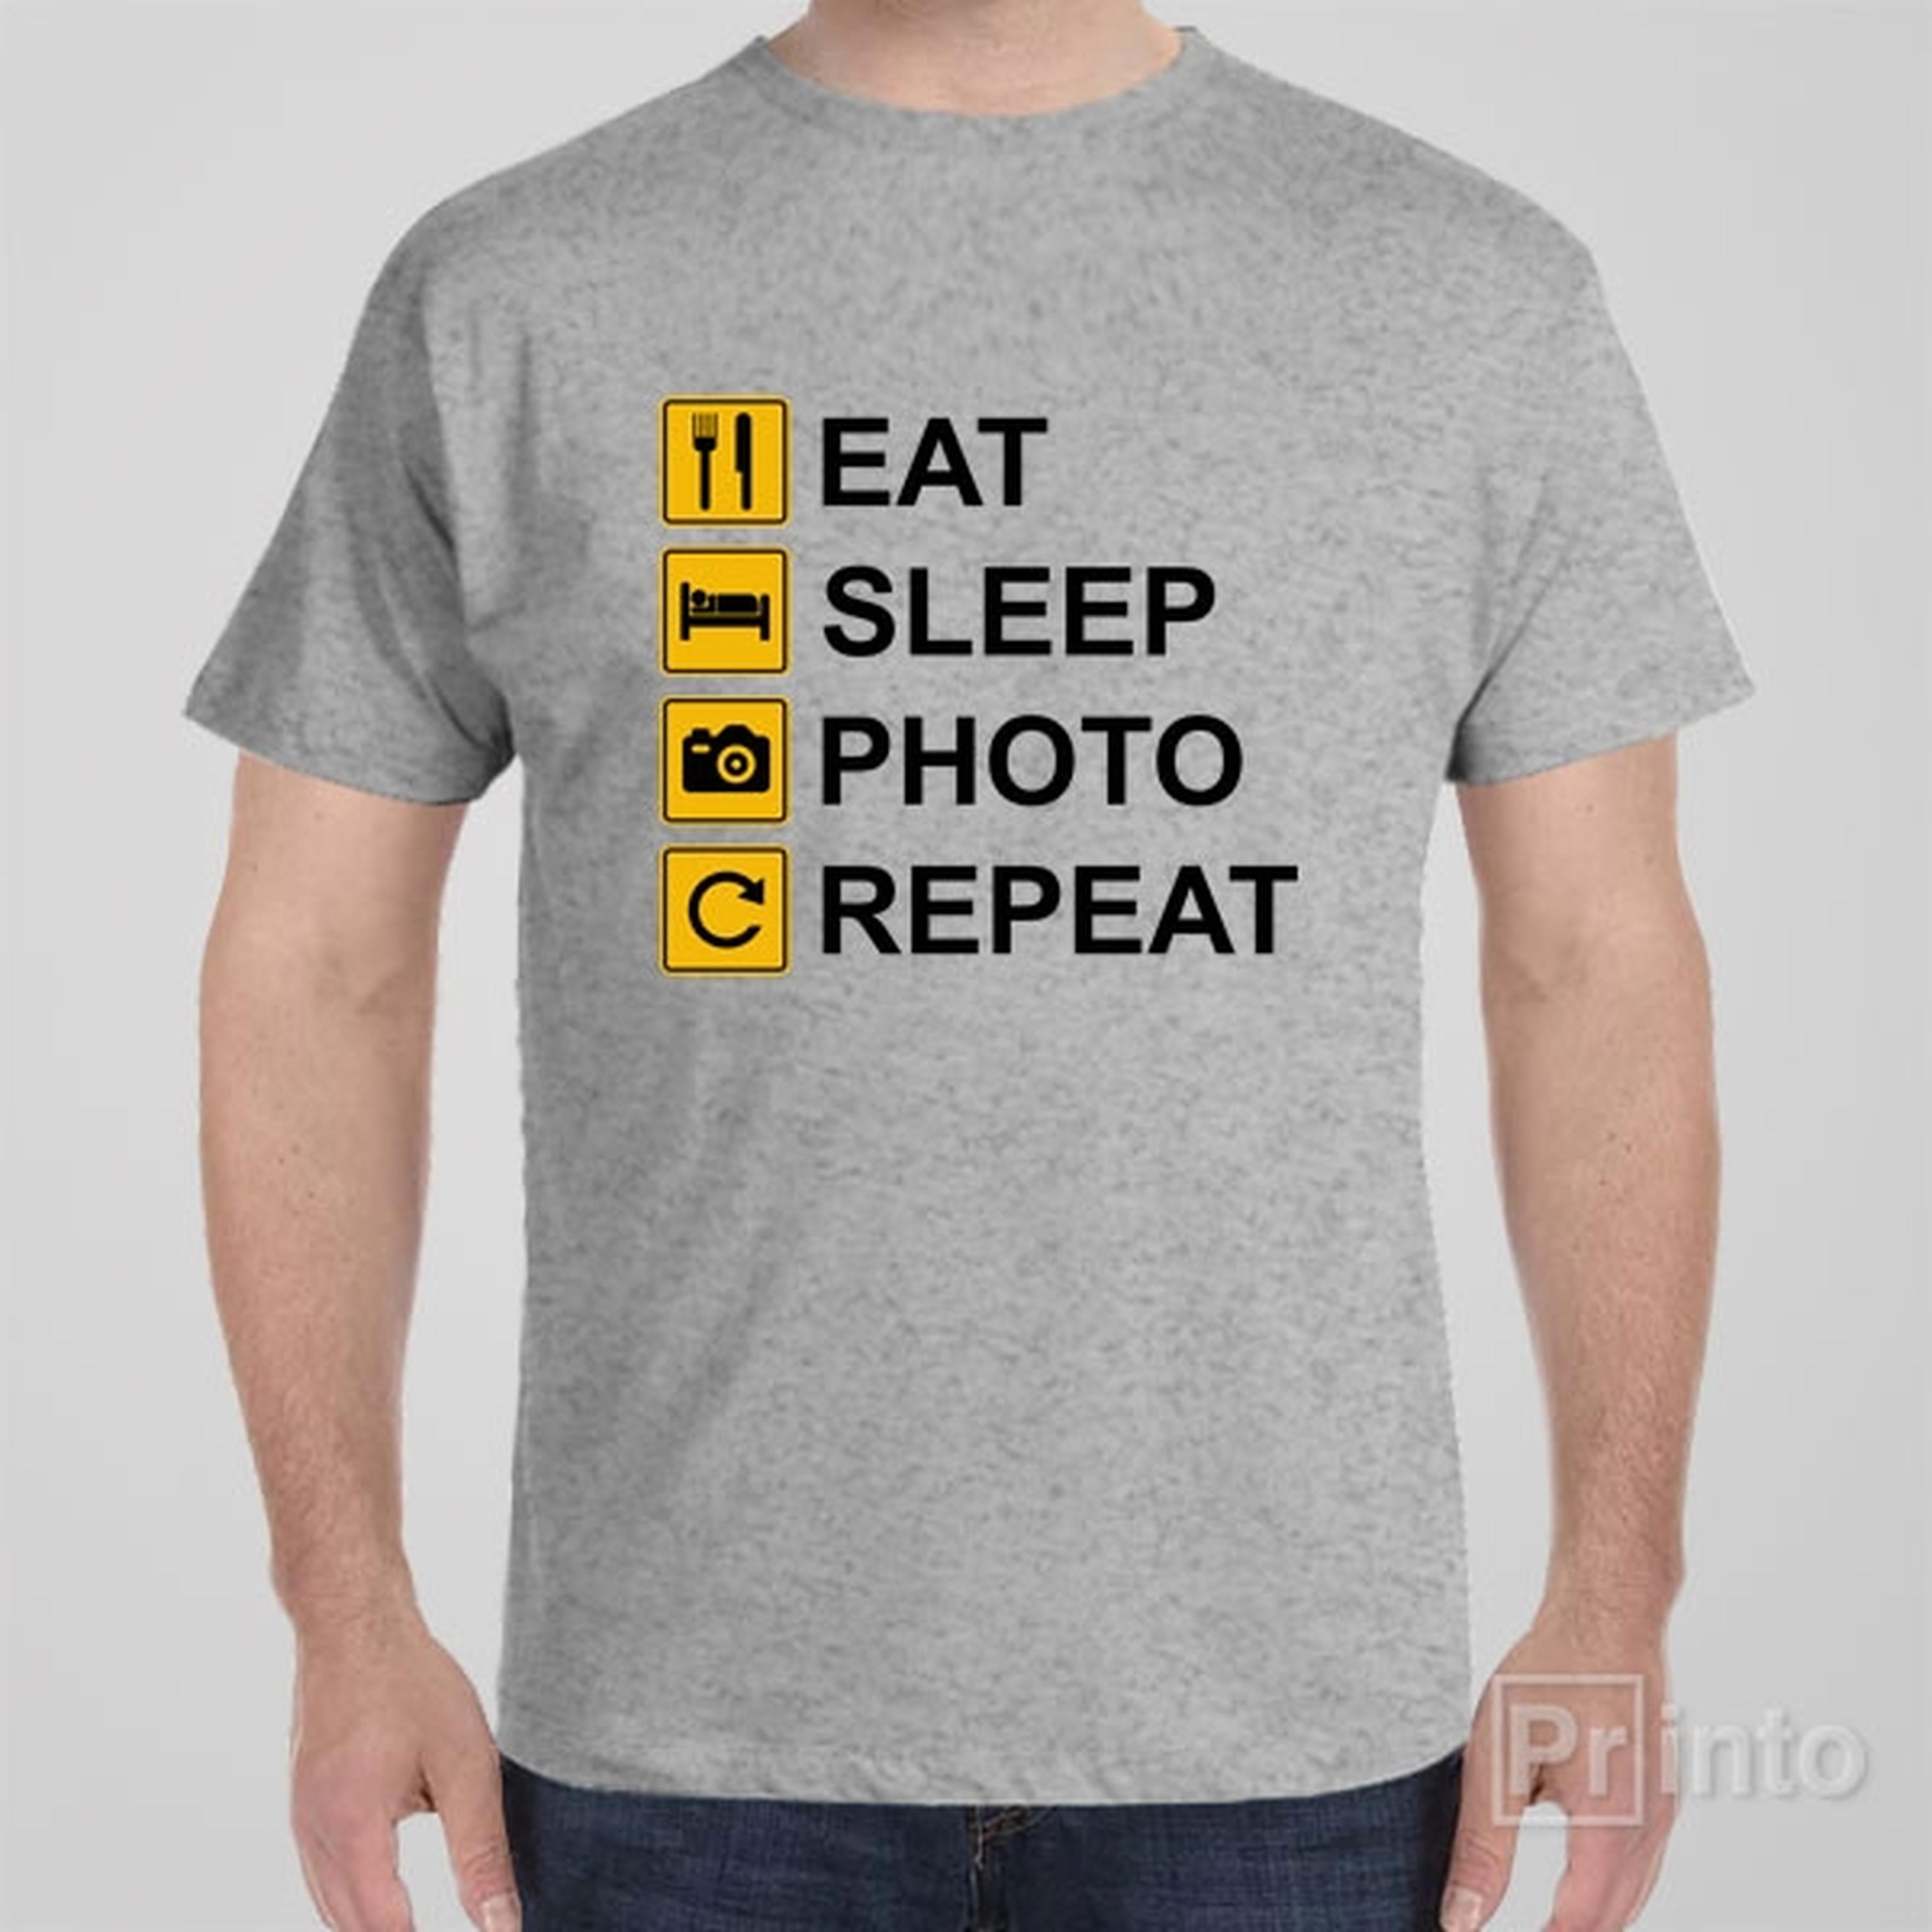 eat-sleep-photo-repeat-t-shirt